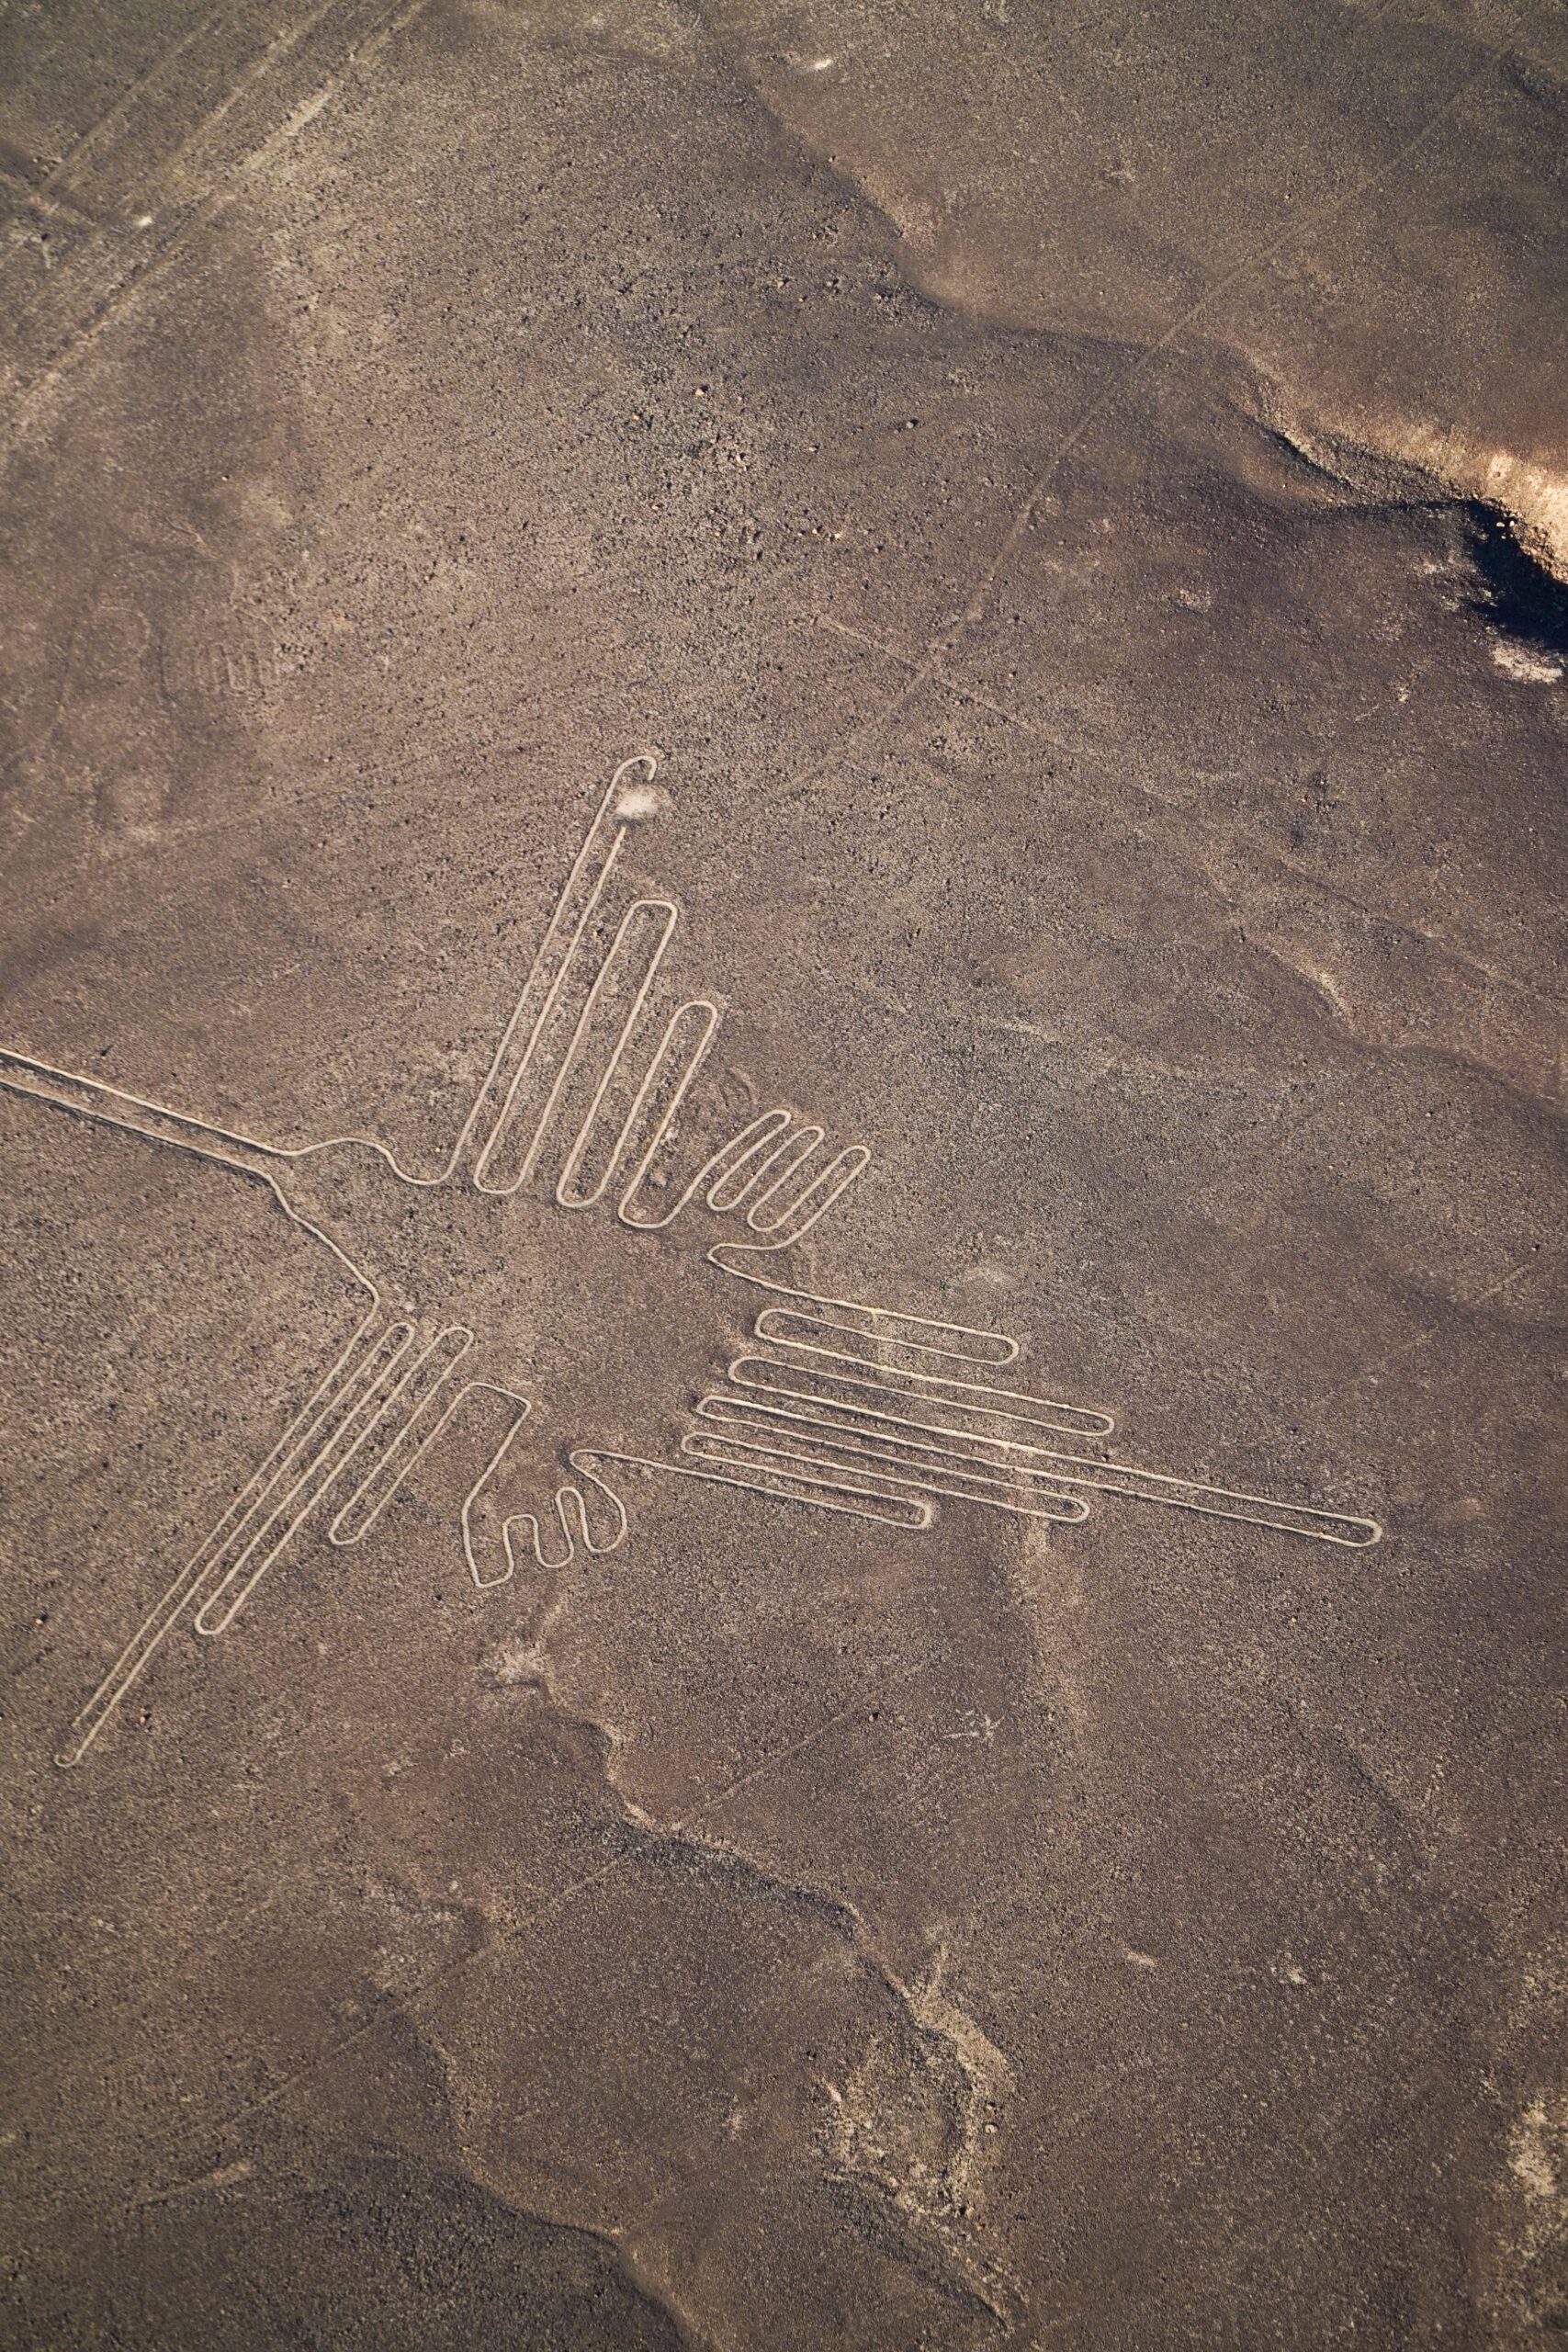 Nazca Lines Overflight , Ballestas and Huacachina